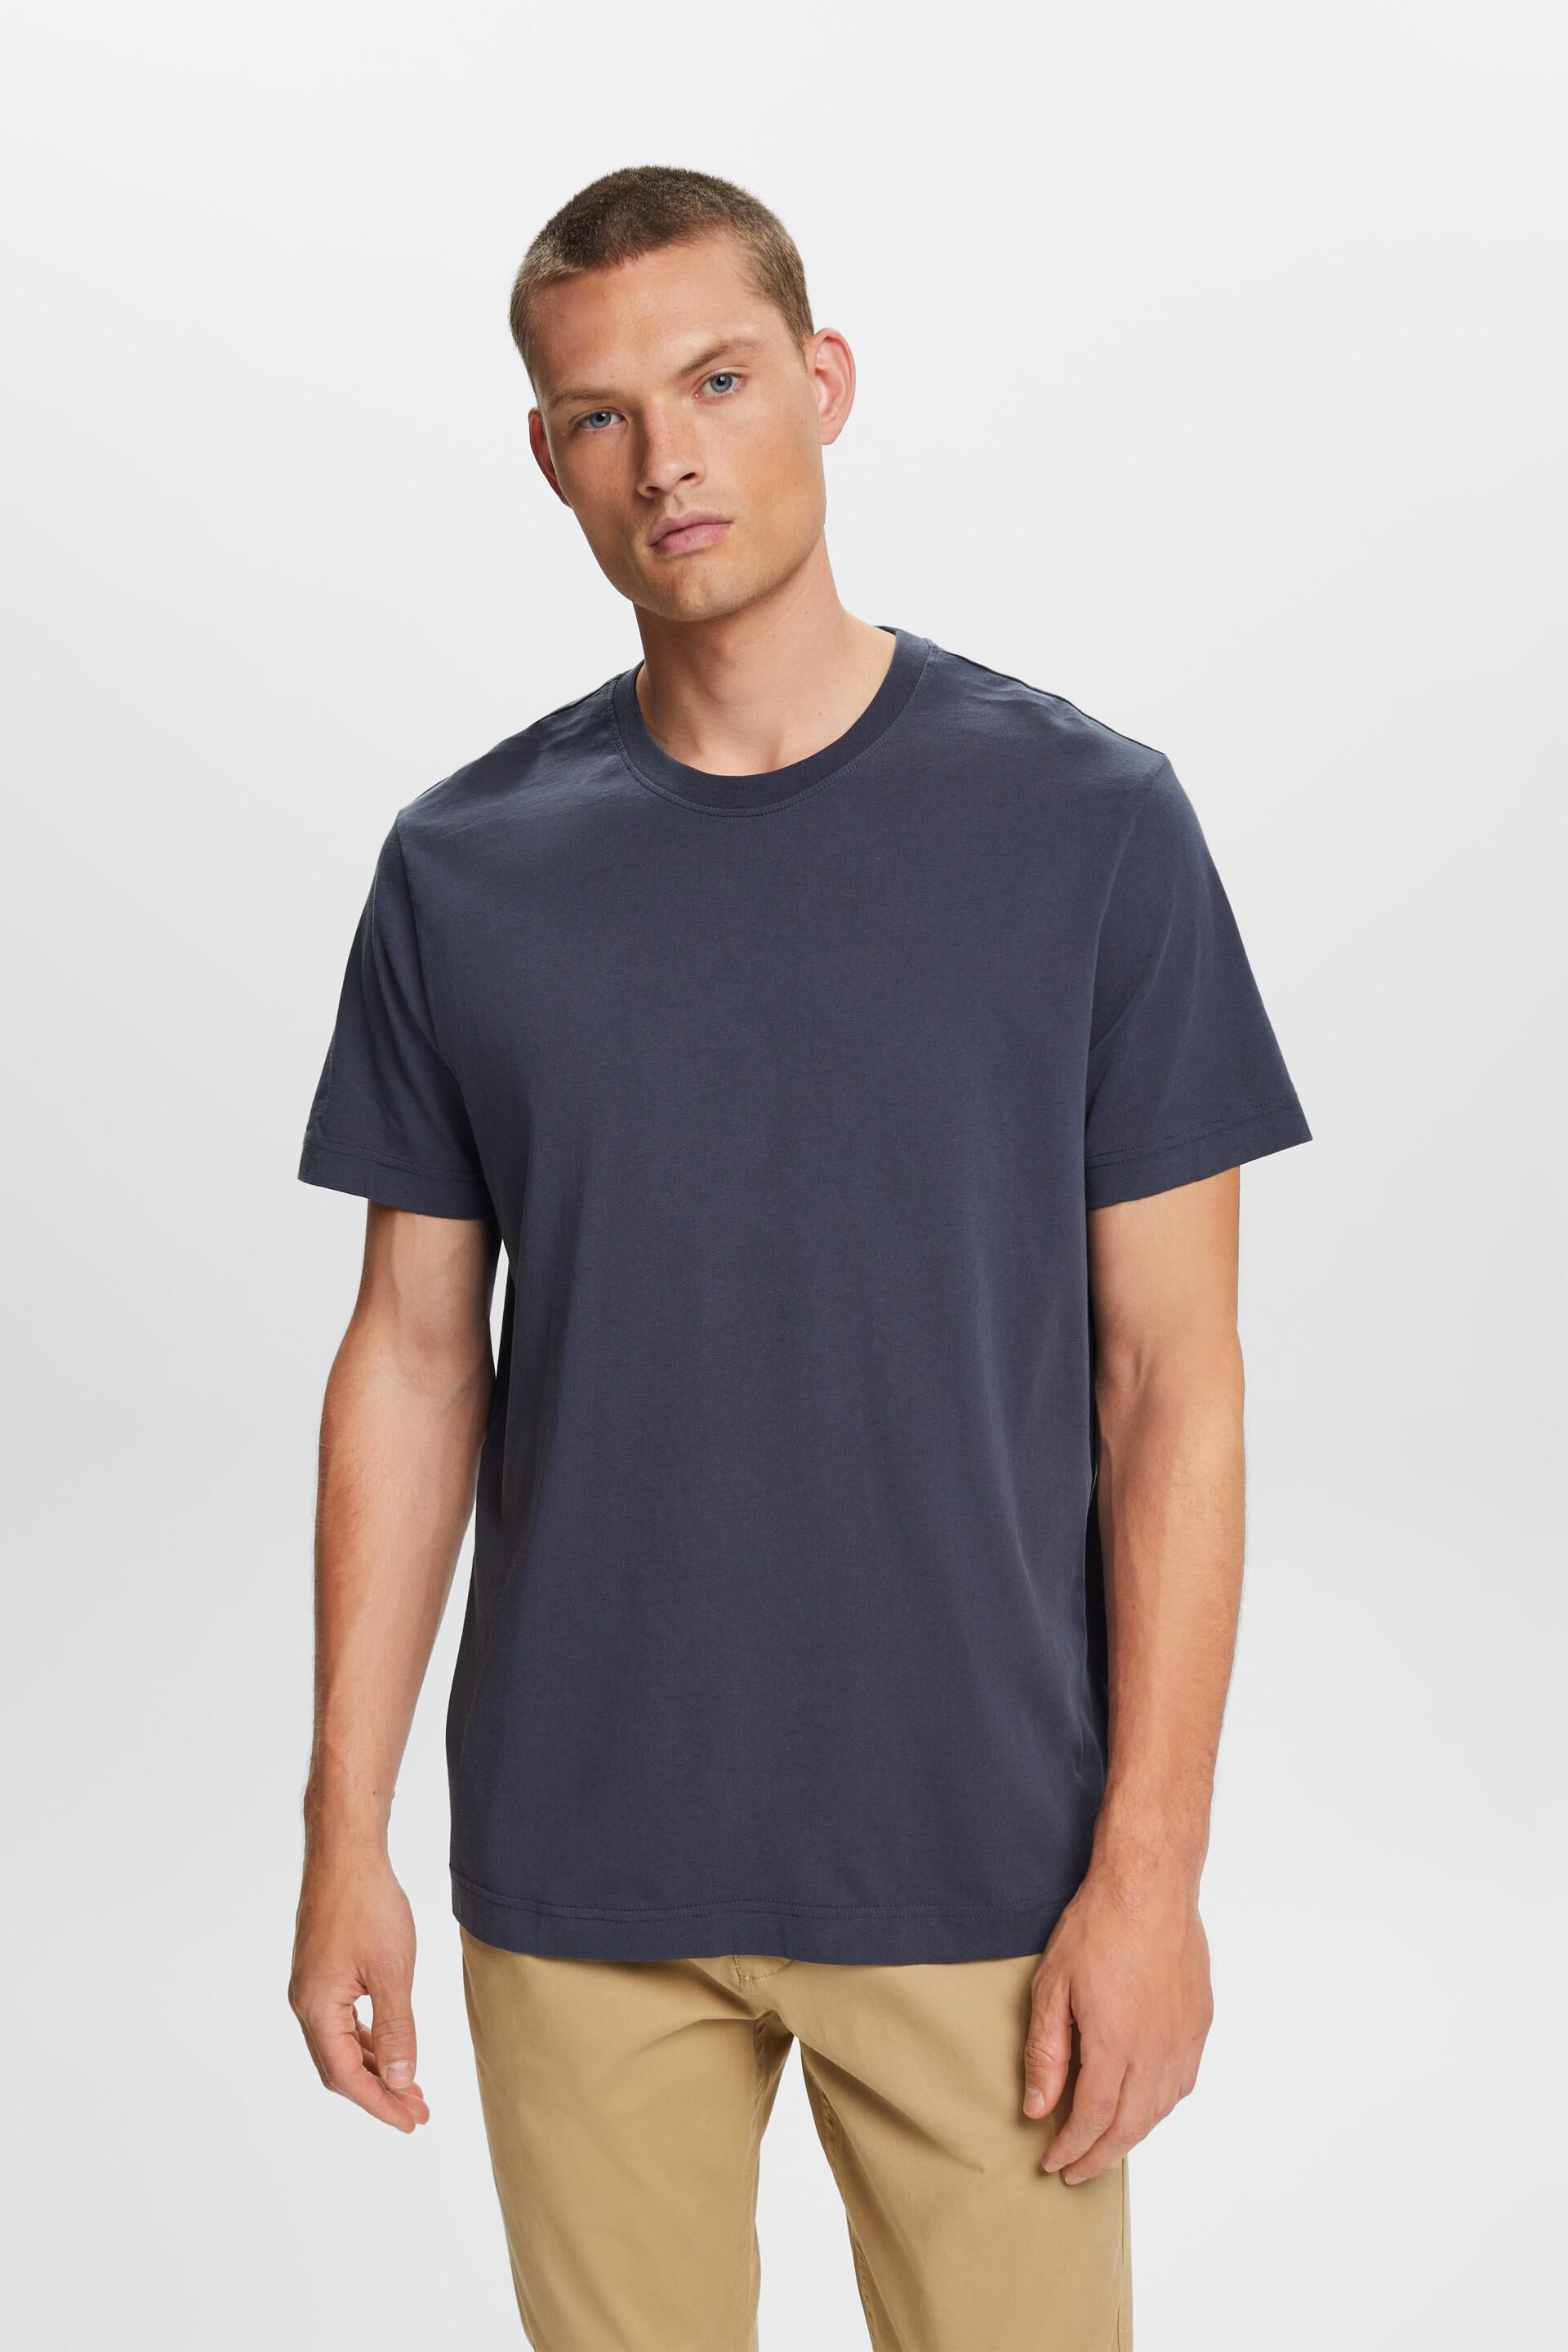 Esprit t-shirt, 100% crewneck Jersey cotton